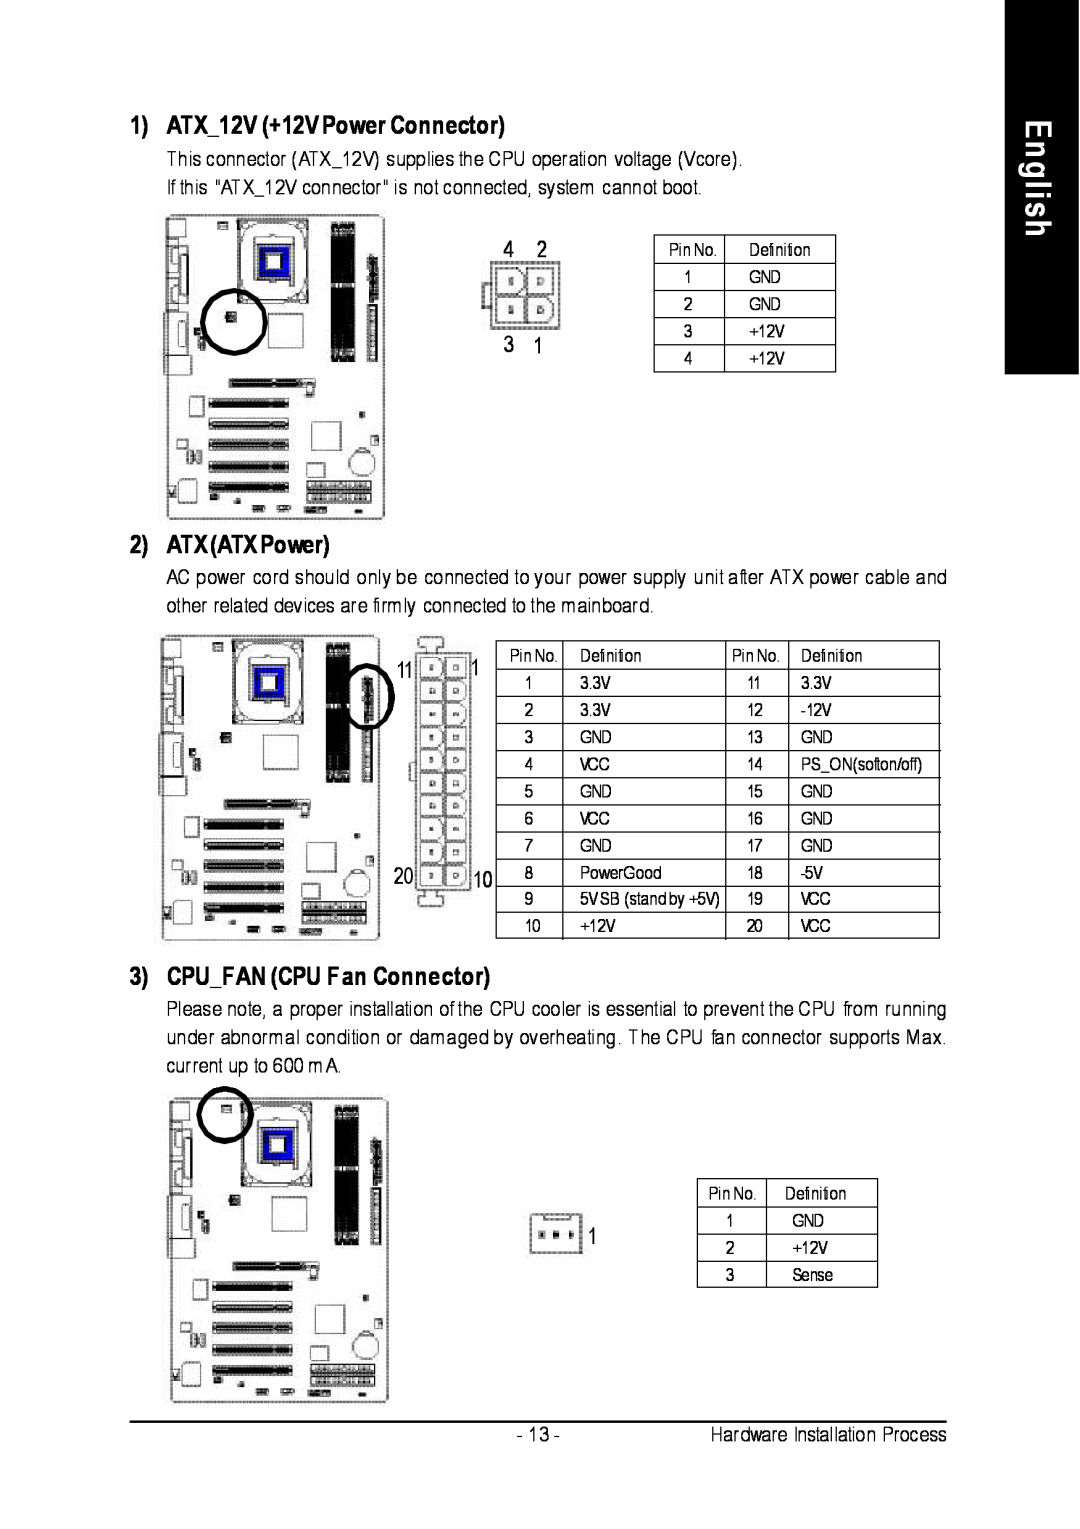 Intel 8I845PE-RZ-C user manual English, 1 ATX12V +12V Power Connector, ATXATX Power, CPUFAN CPU Fan Connector 